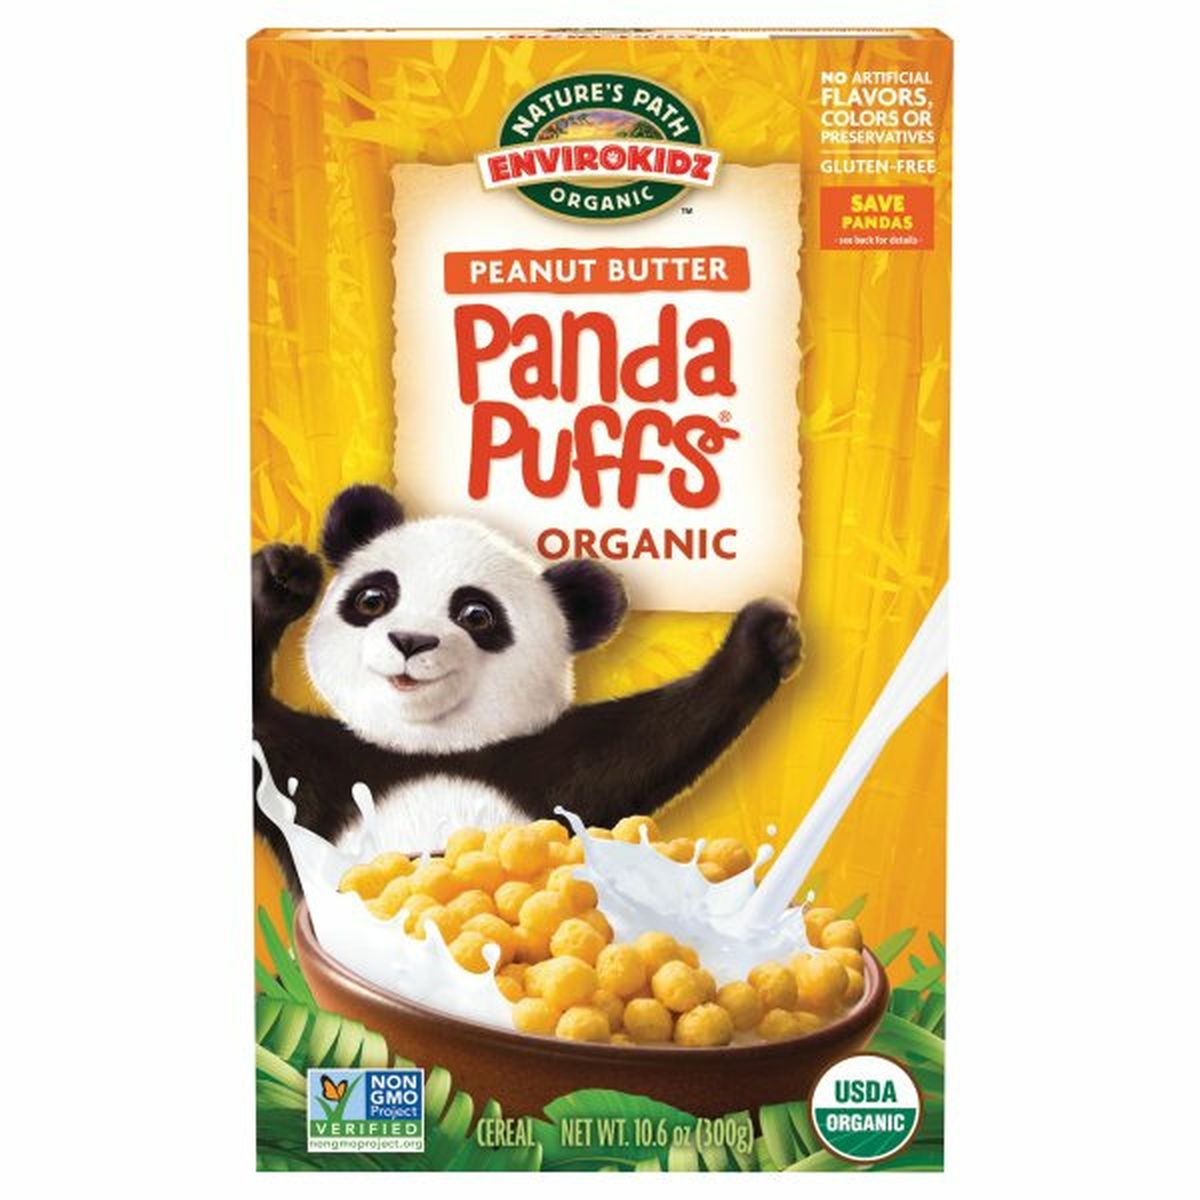 Calories in Nature's Path EnviroKidz EnviroKidz Cereal, Organic, Peanut Butter, Panda Puffs